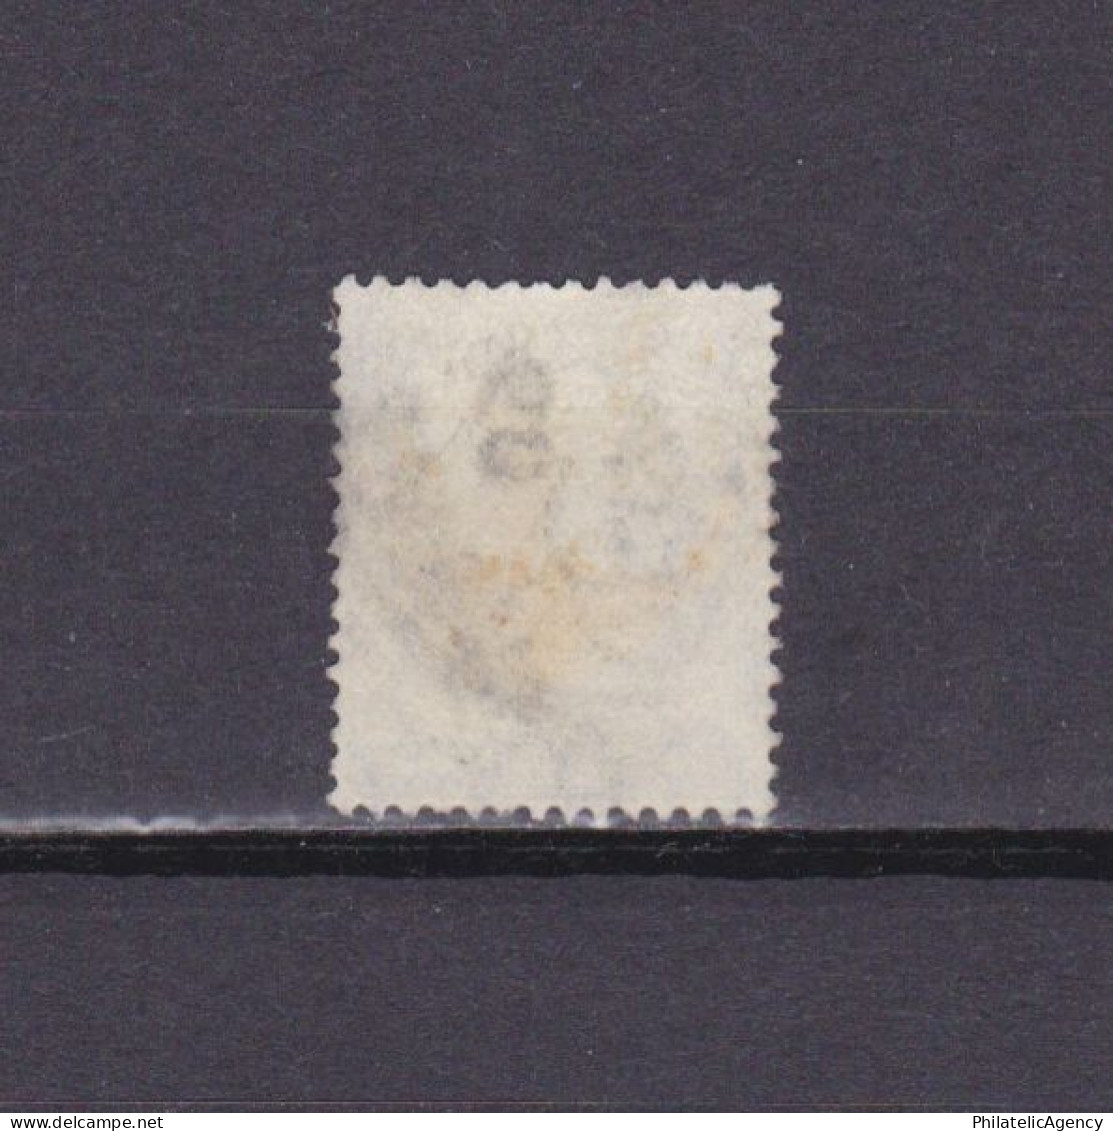 JAMAICA 1901, SG #41, Used - Jamaïque (...-1961)